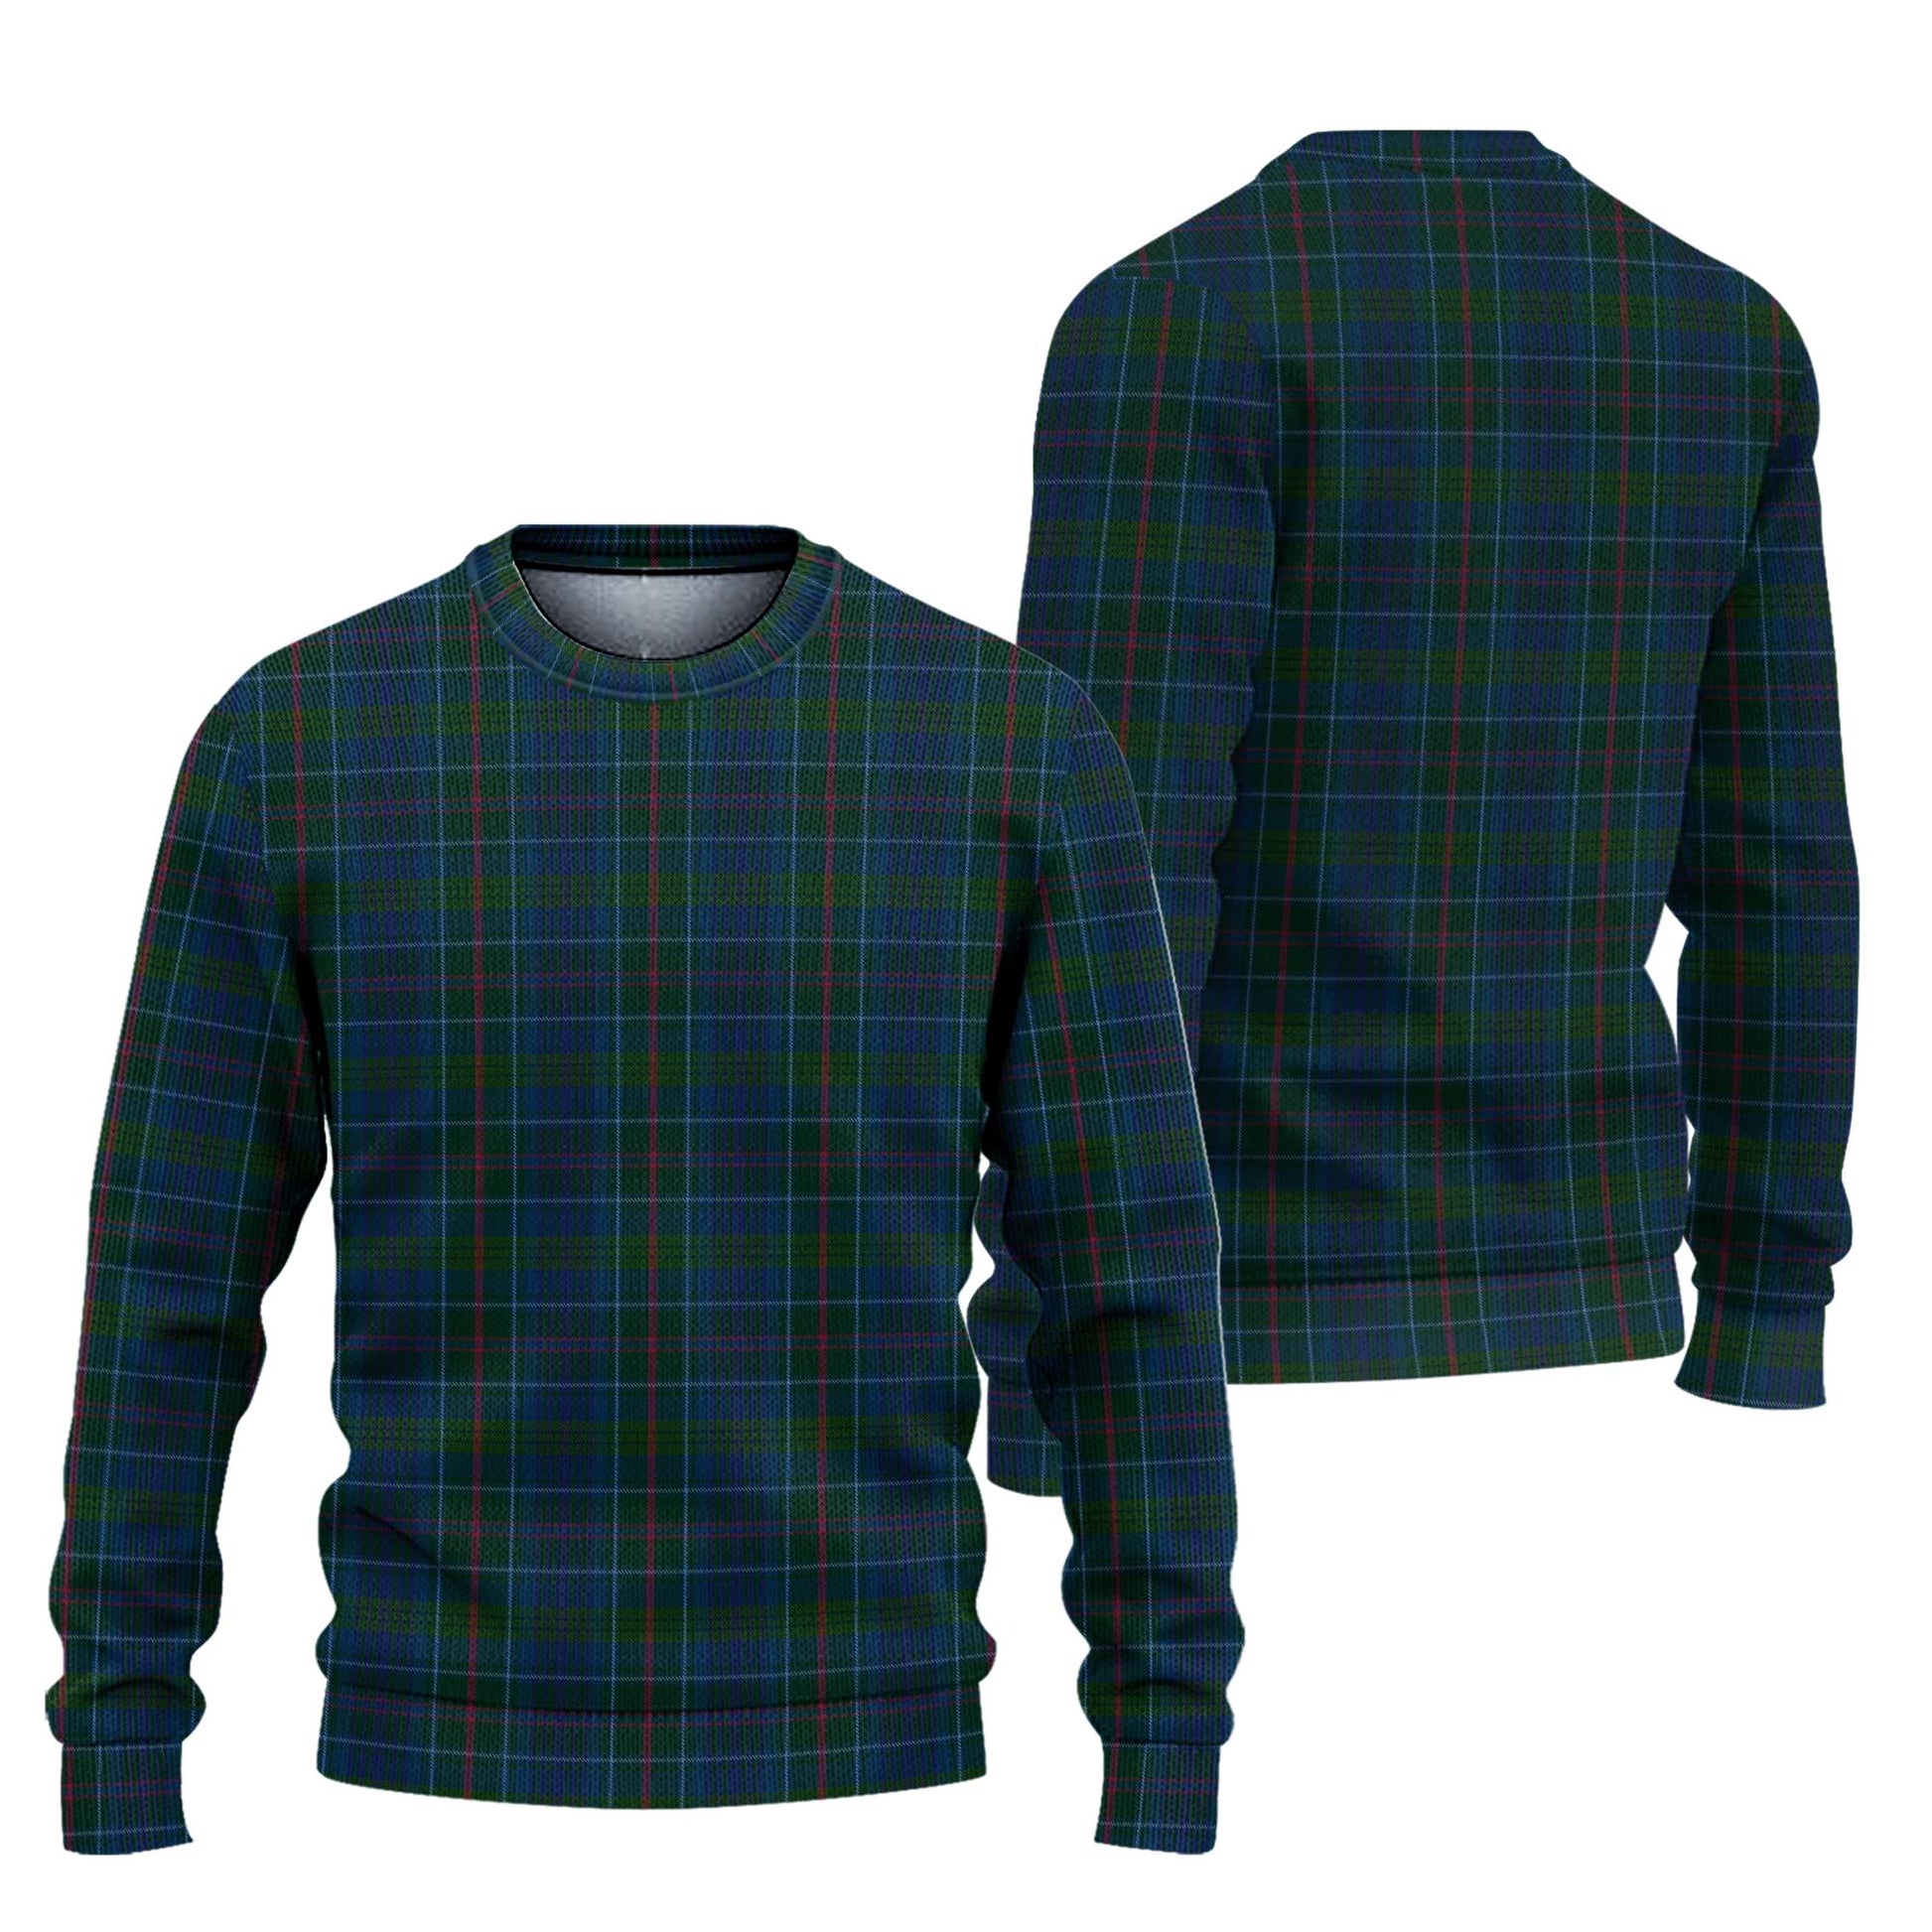 Richard of Wales Tartan Knitted Sweater Unisex - Tartanvibesclothing